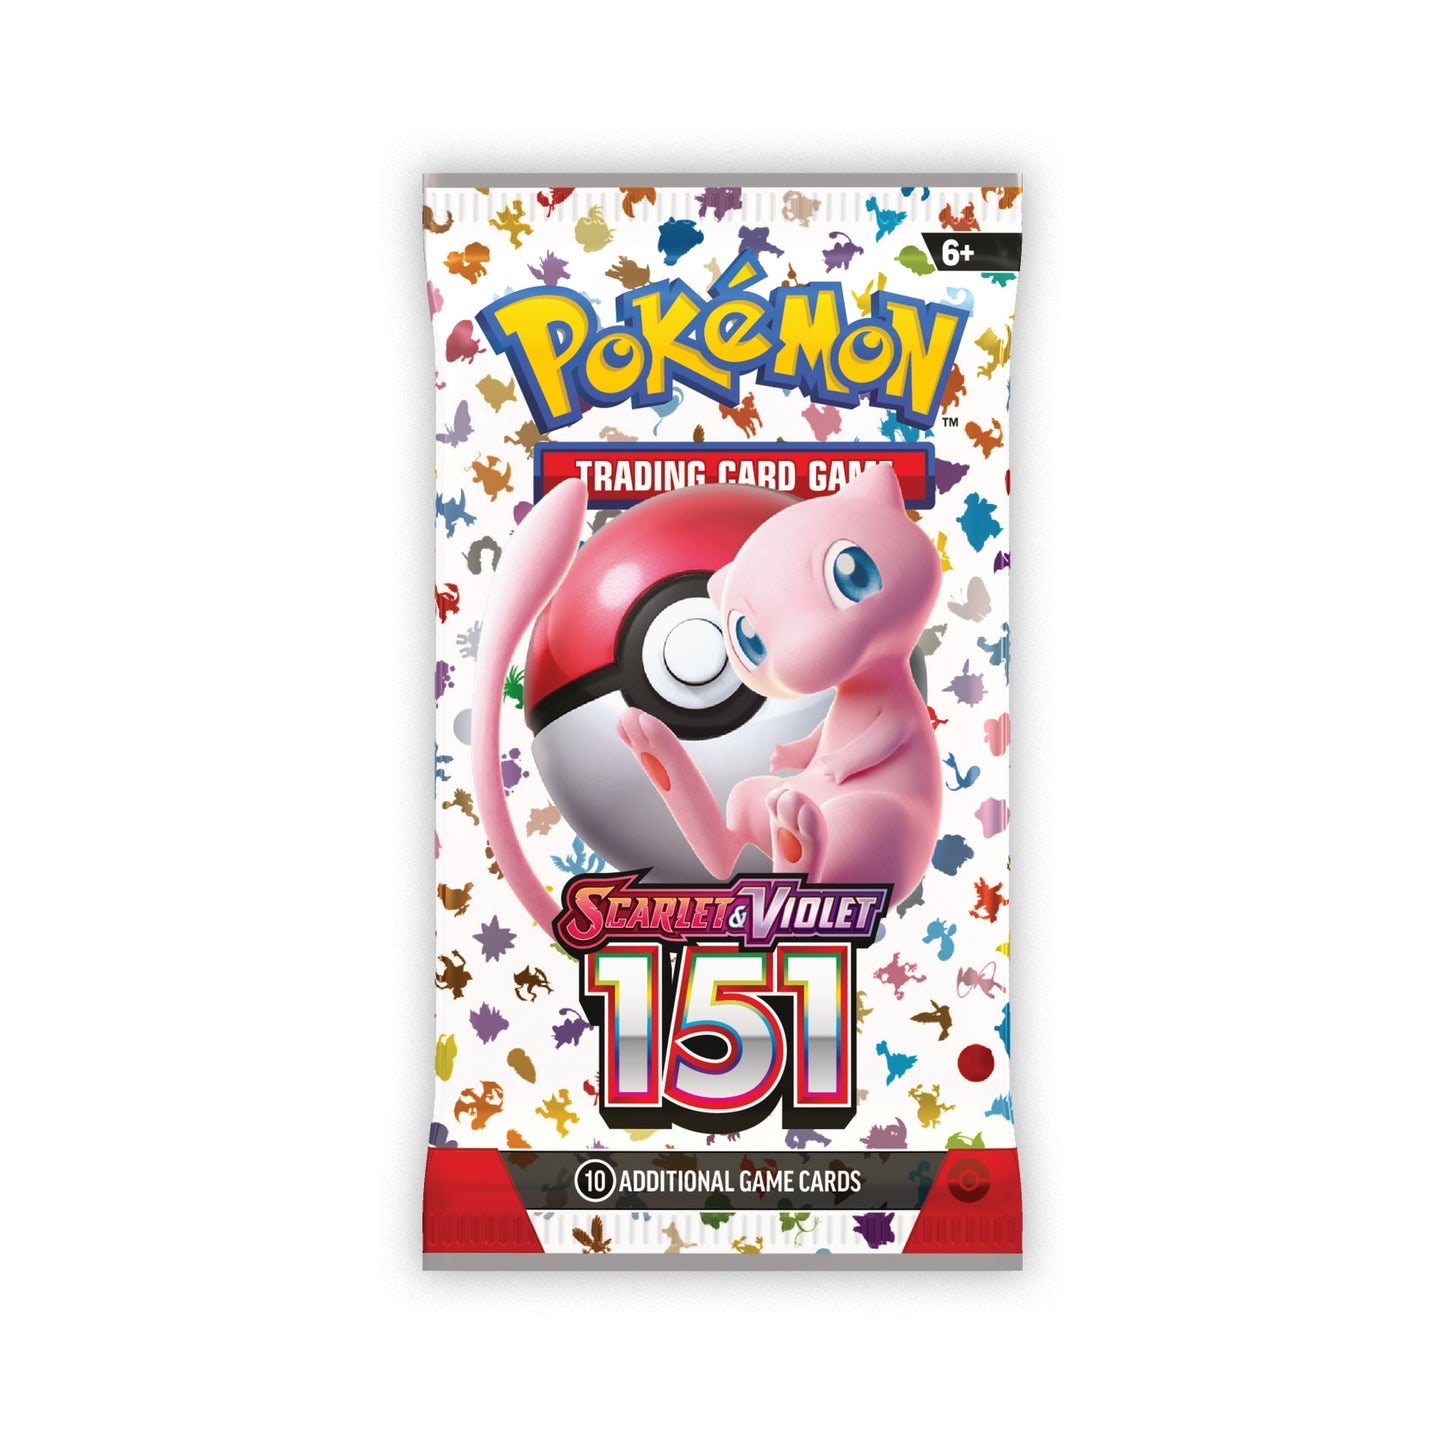 Pokémon TCG: Scarlet & Violet 151 Single Booster Pack